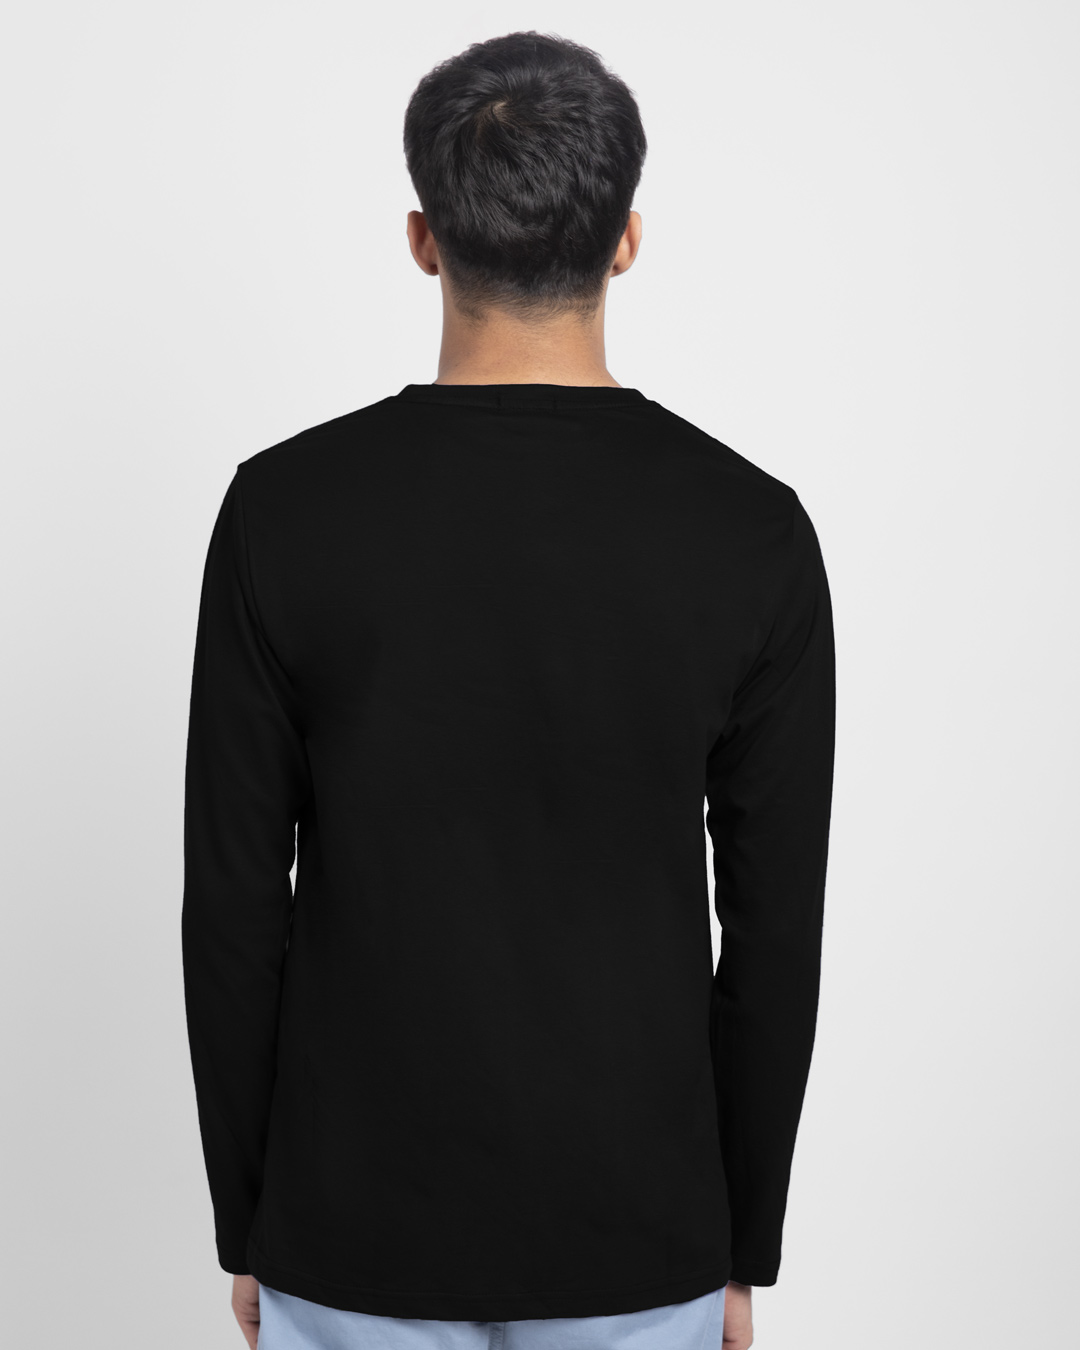 Shop Snooze Lose Full Sleeve T-Shirt Black-Back